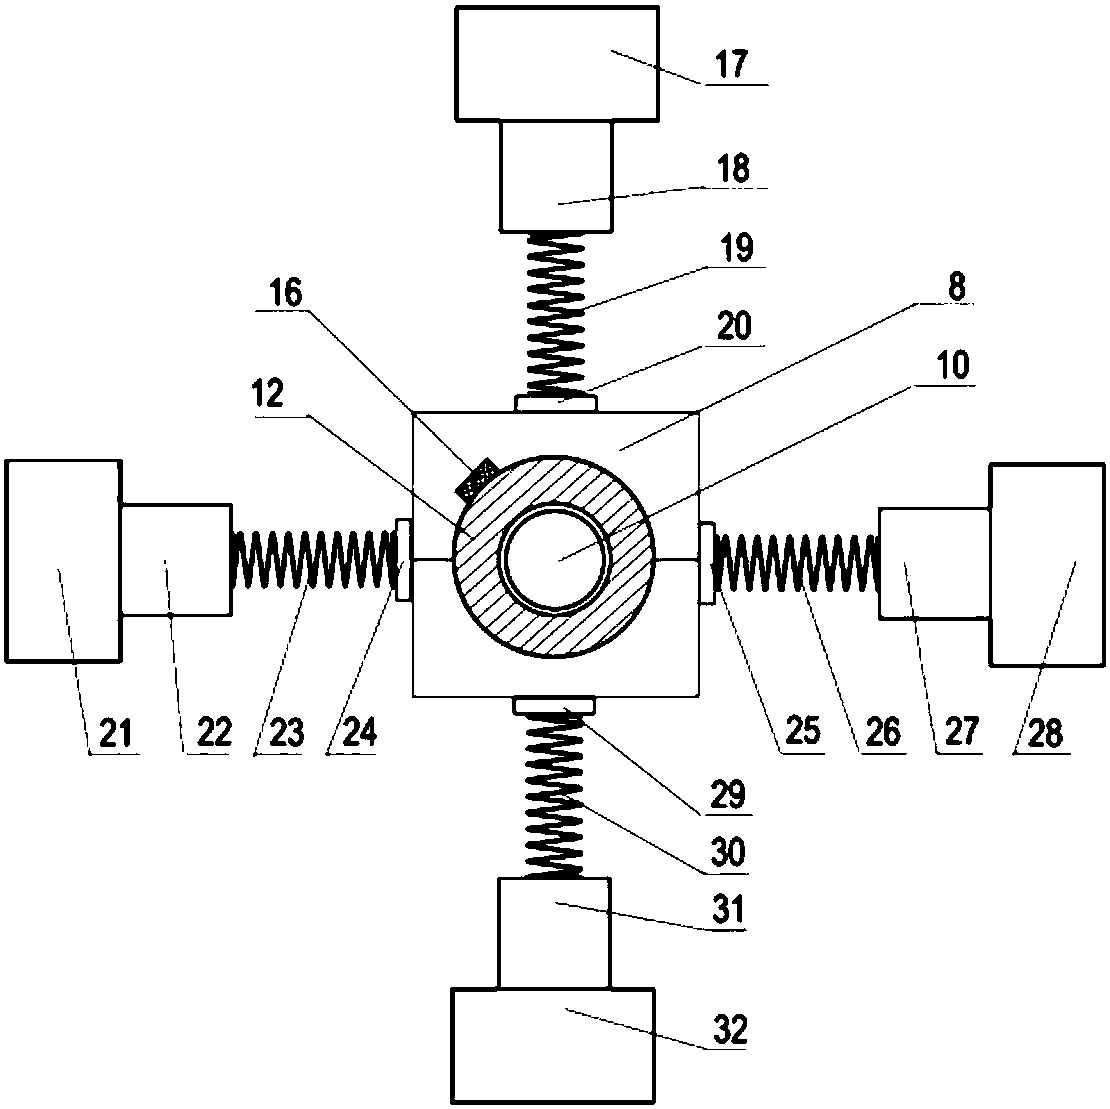 Bearing test device for applying radial alternating load based on synchronous belt drive mechanism